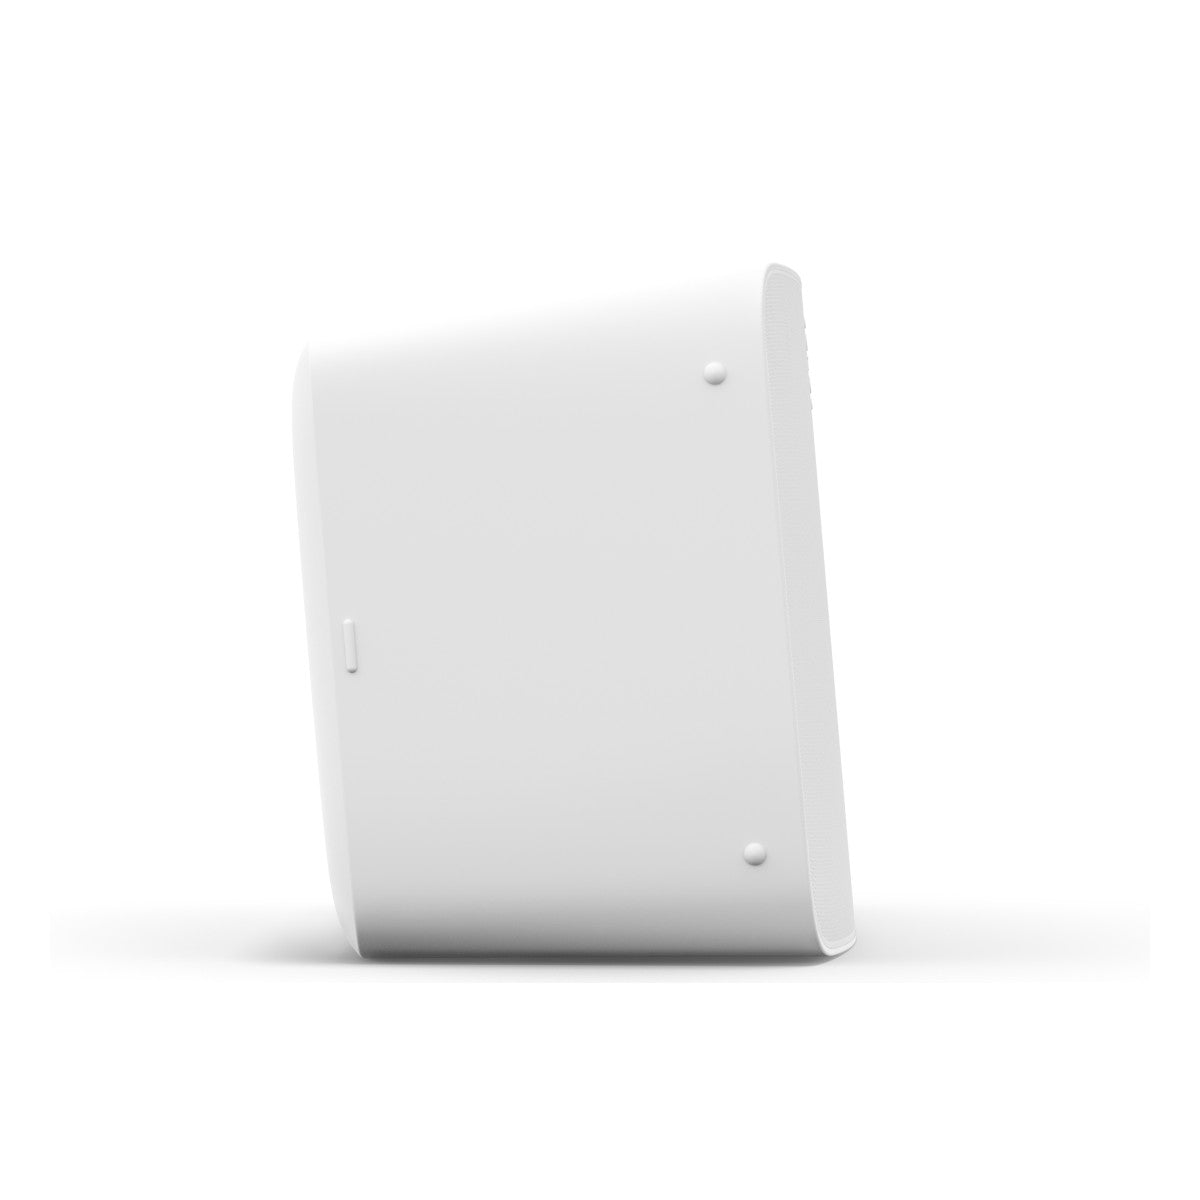 Sonos Five Wireless Speaker for Streaming Music (White)